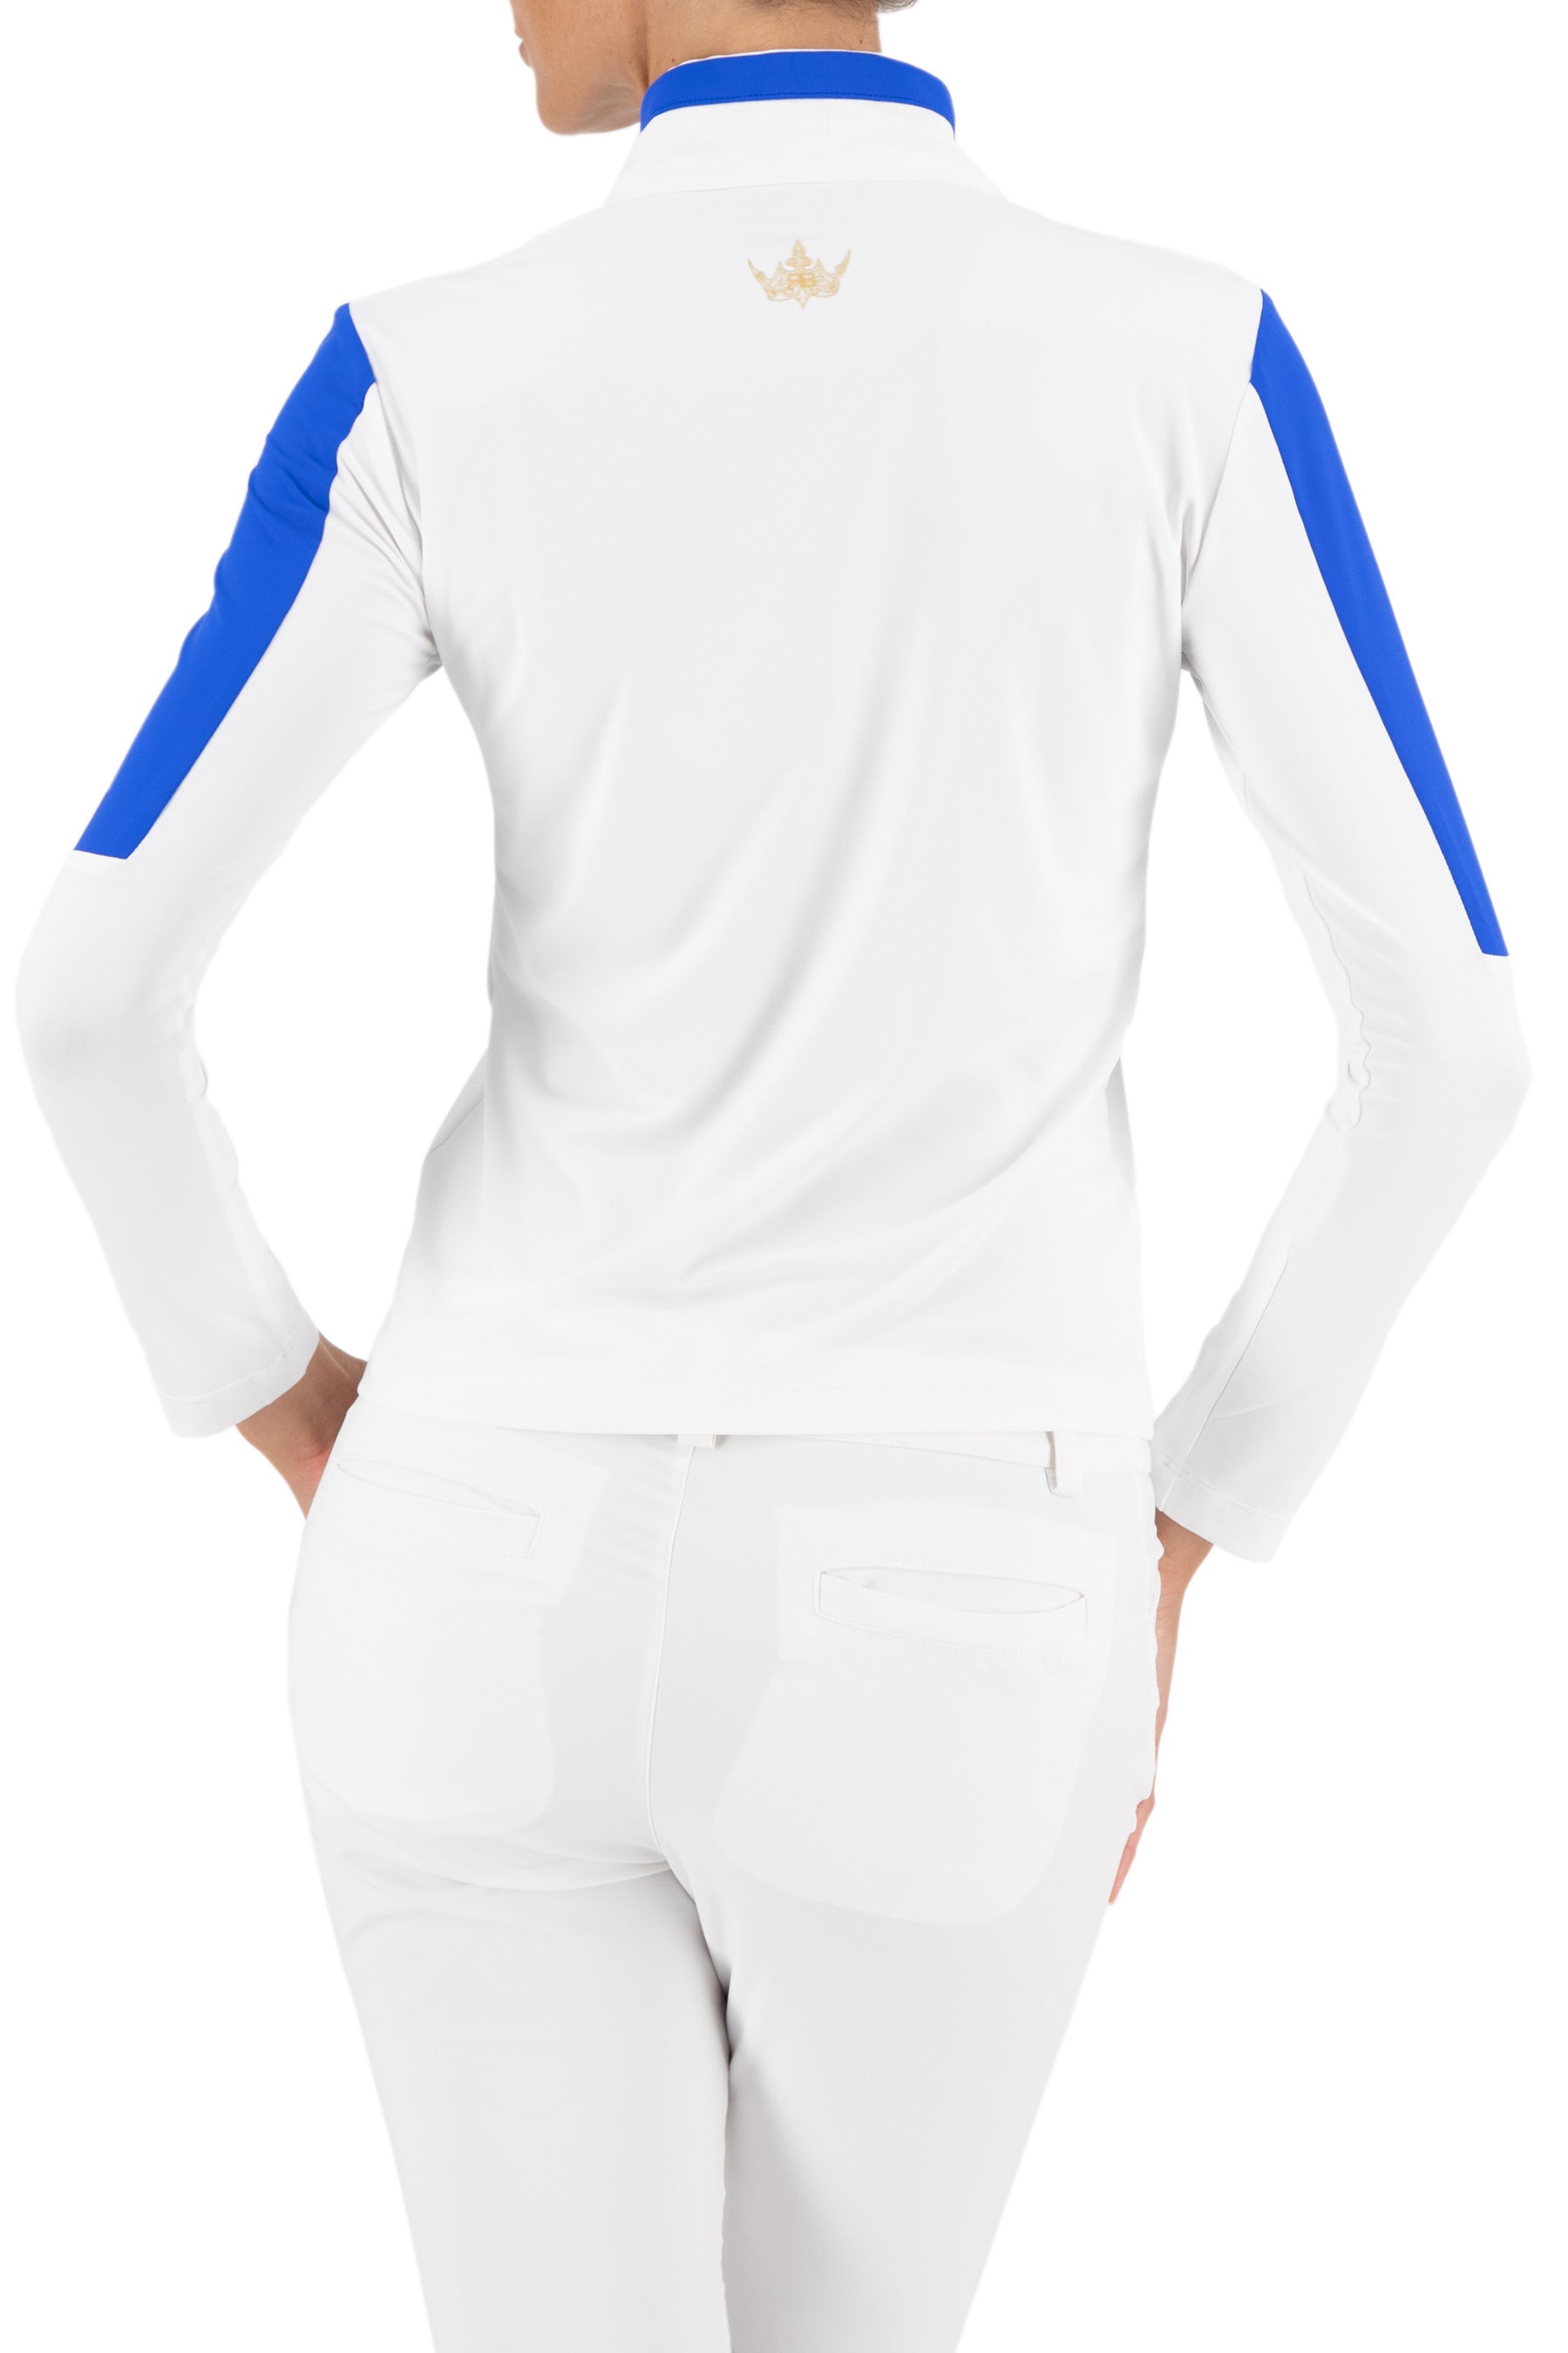 Alessa Long Sleeve 1/4 Zip Top in White/Sardegana Blue